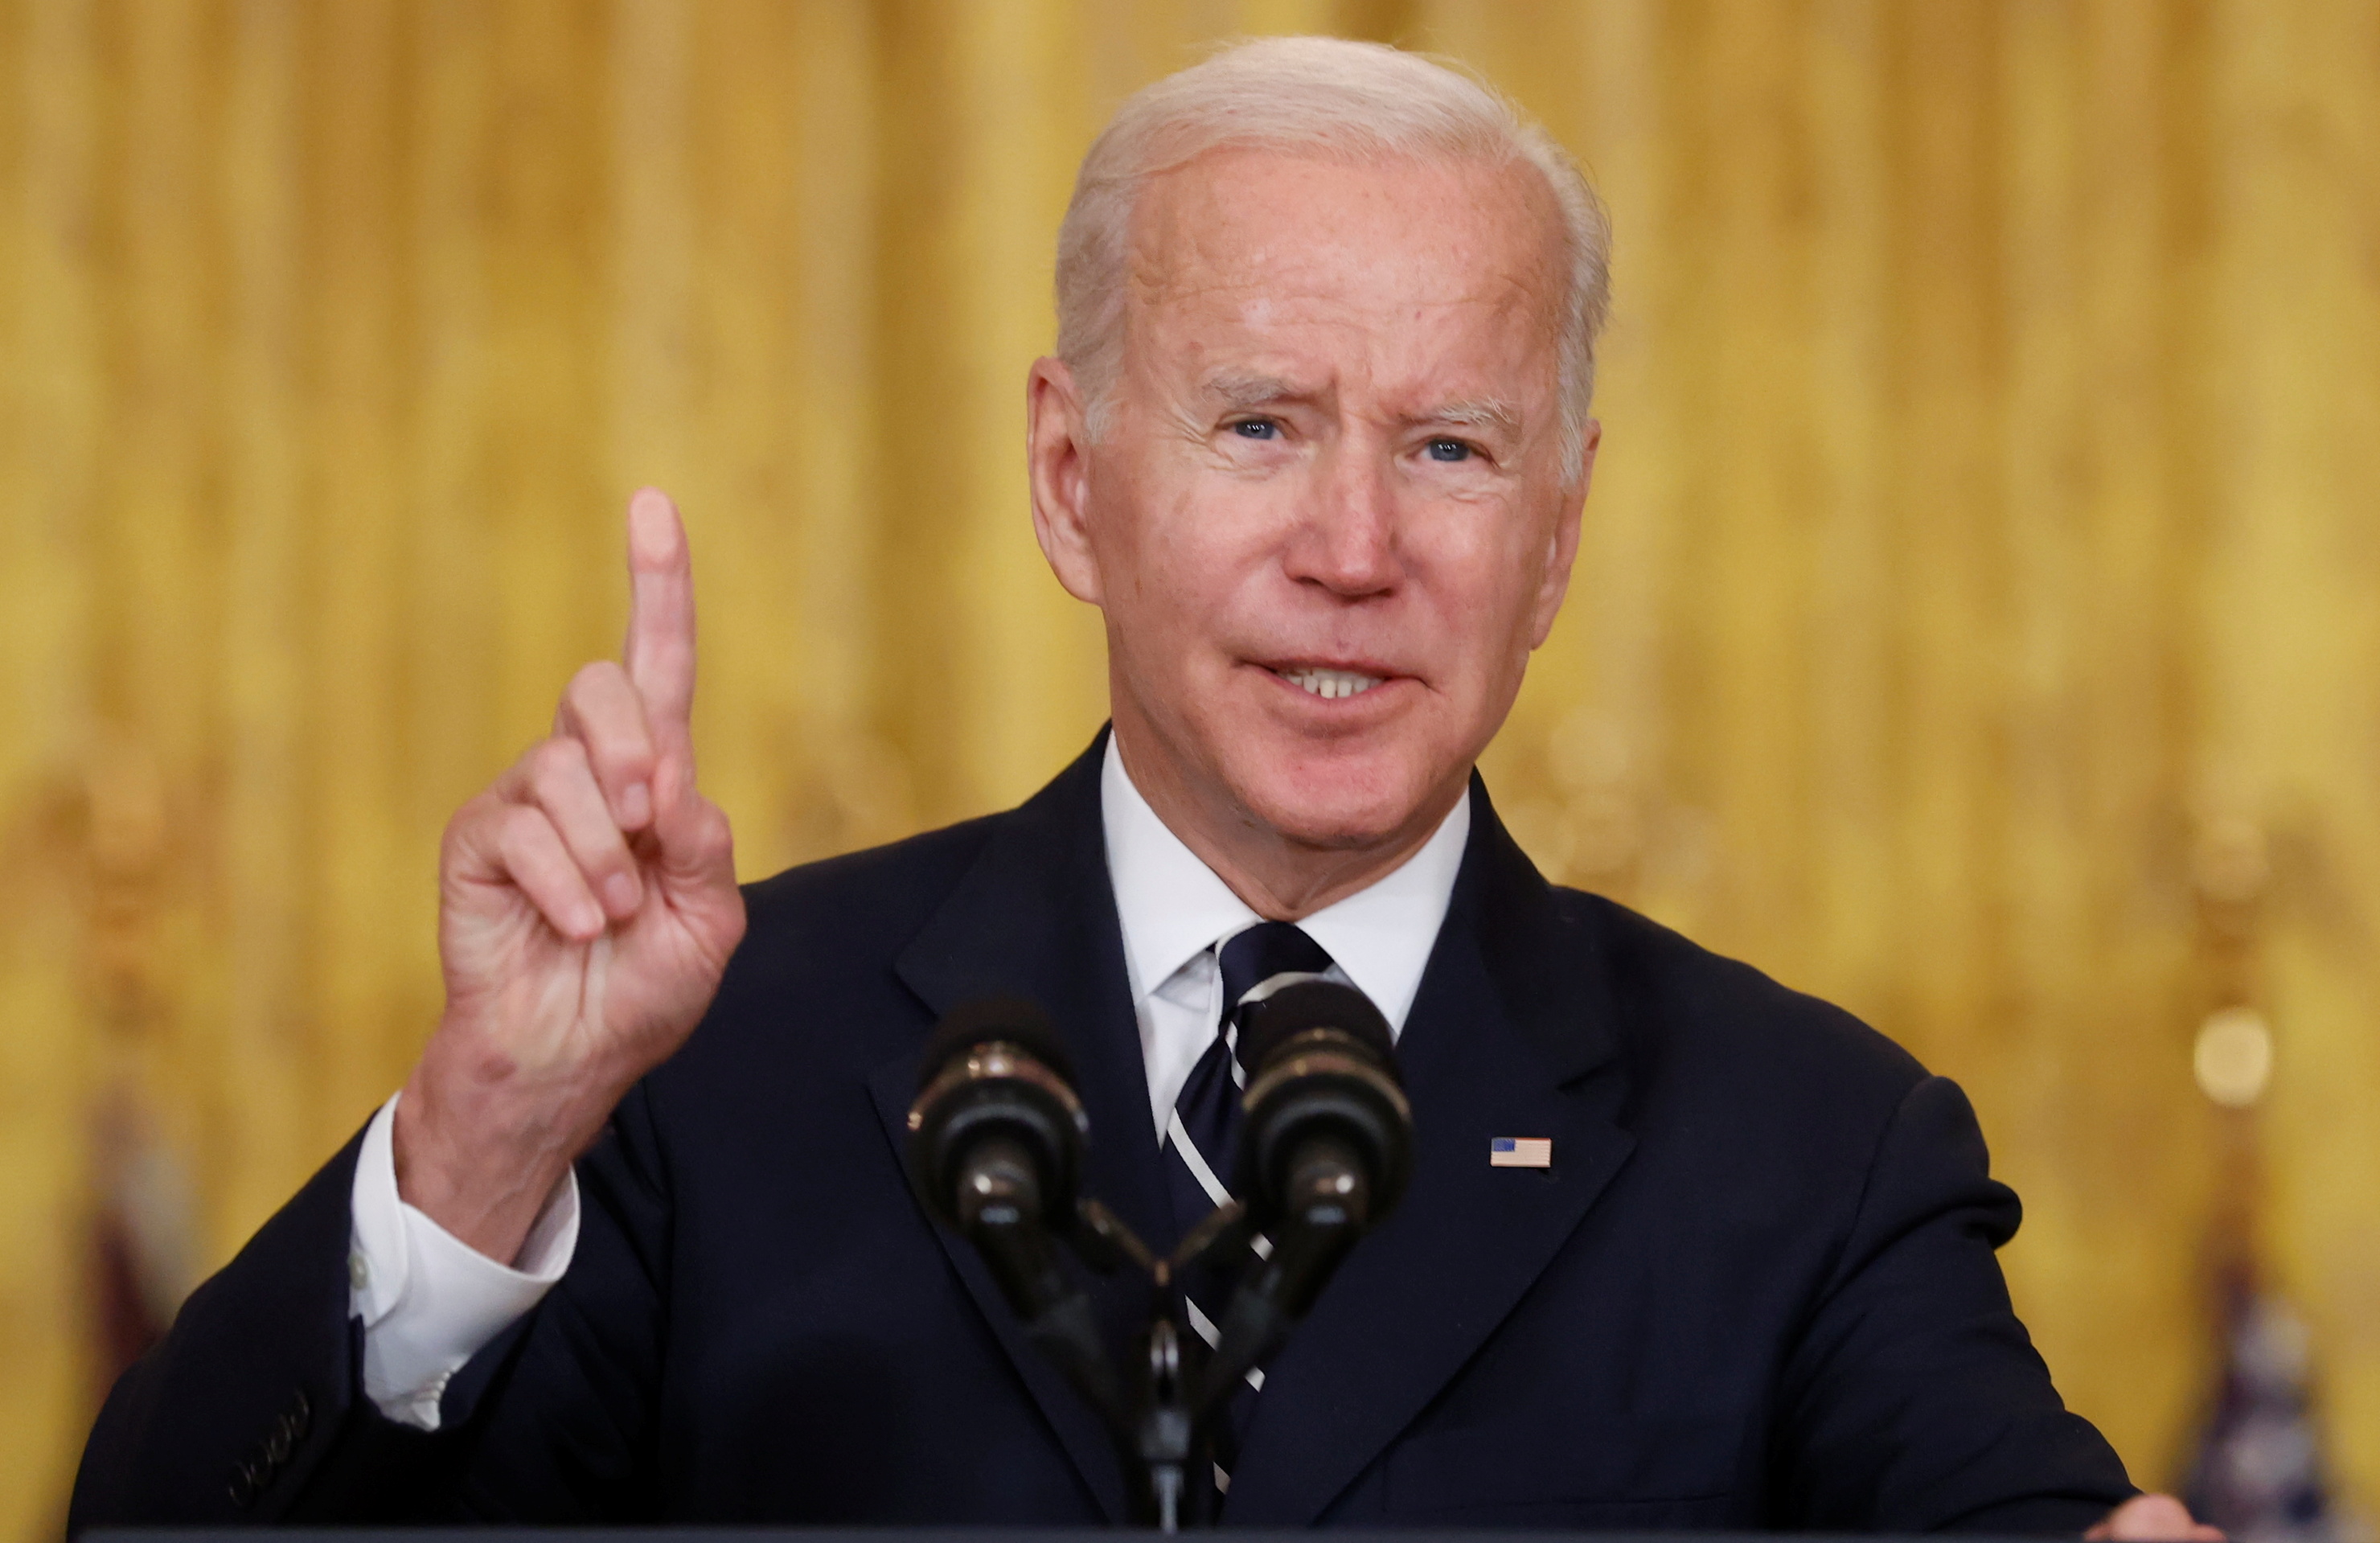 U.S. President Joe Biden provides update on Build Back Better agenda and infrastructure deal at the White House in Washington